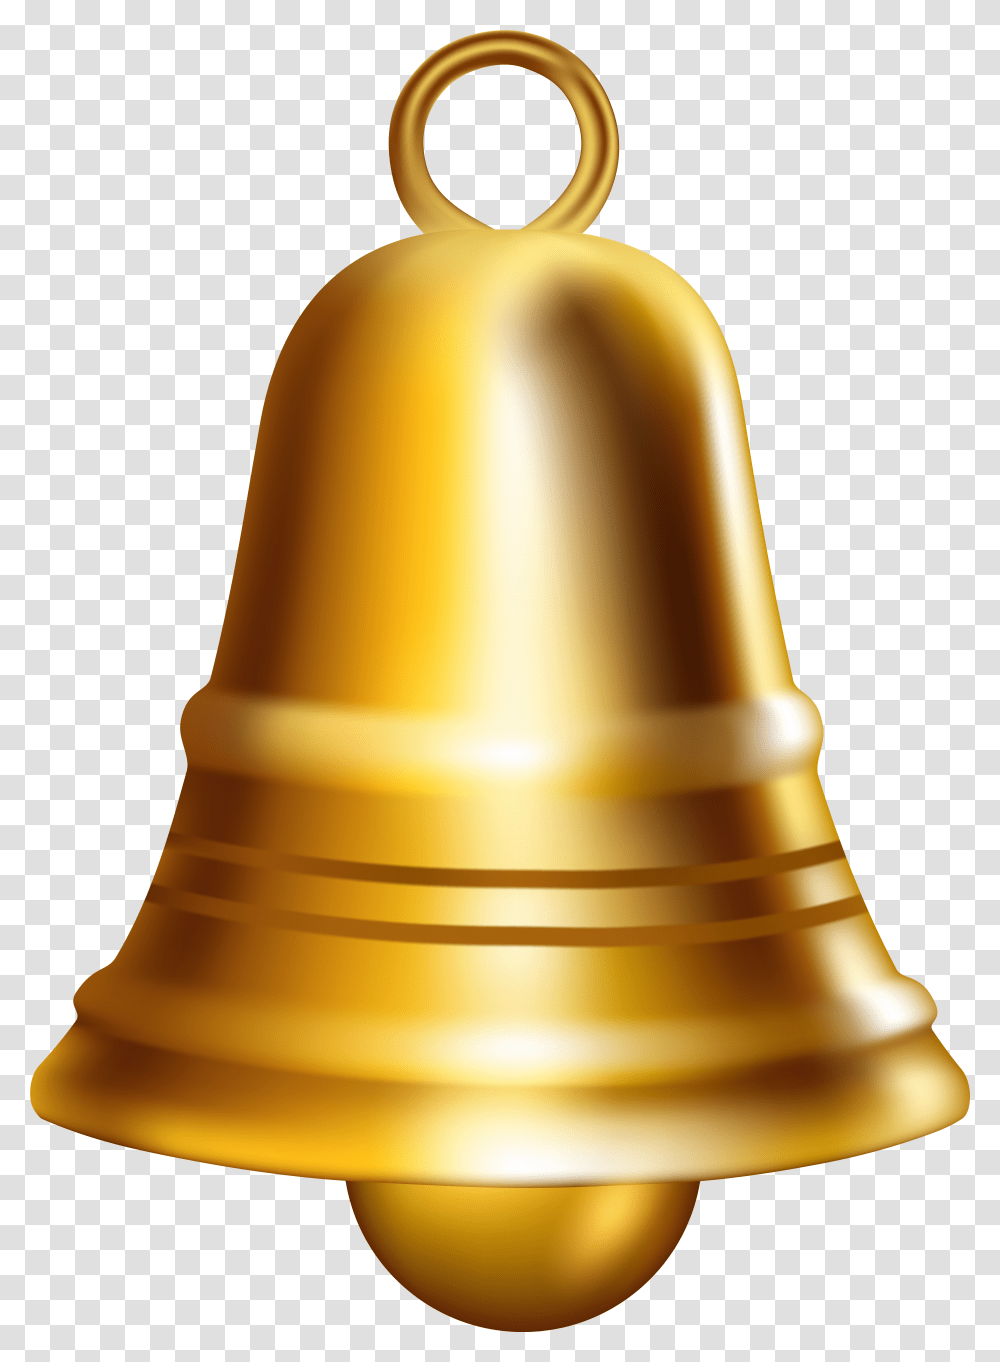 Golden Bell Clip Art Image Bells Transparent Png